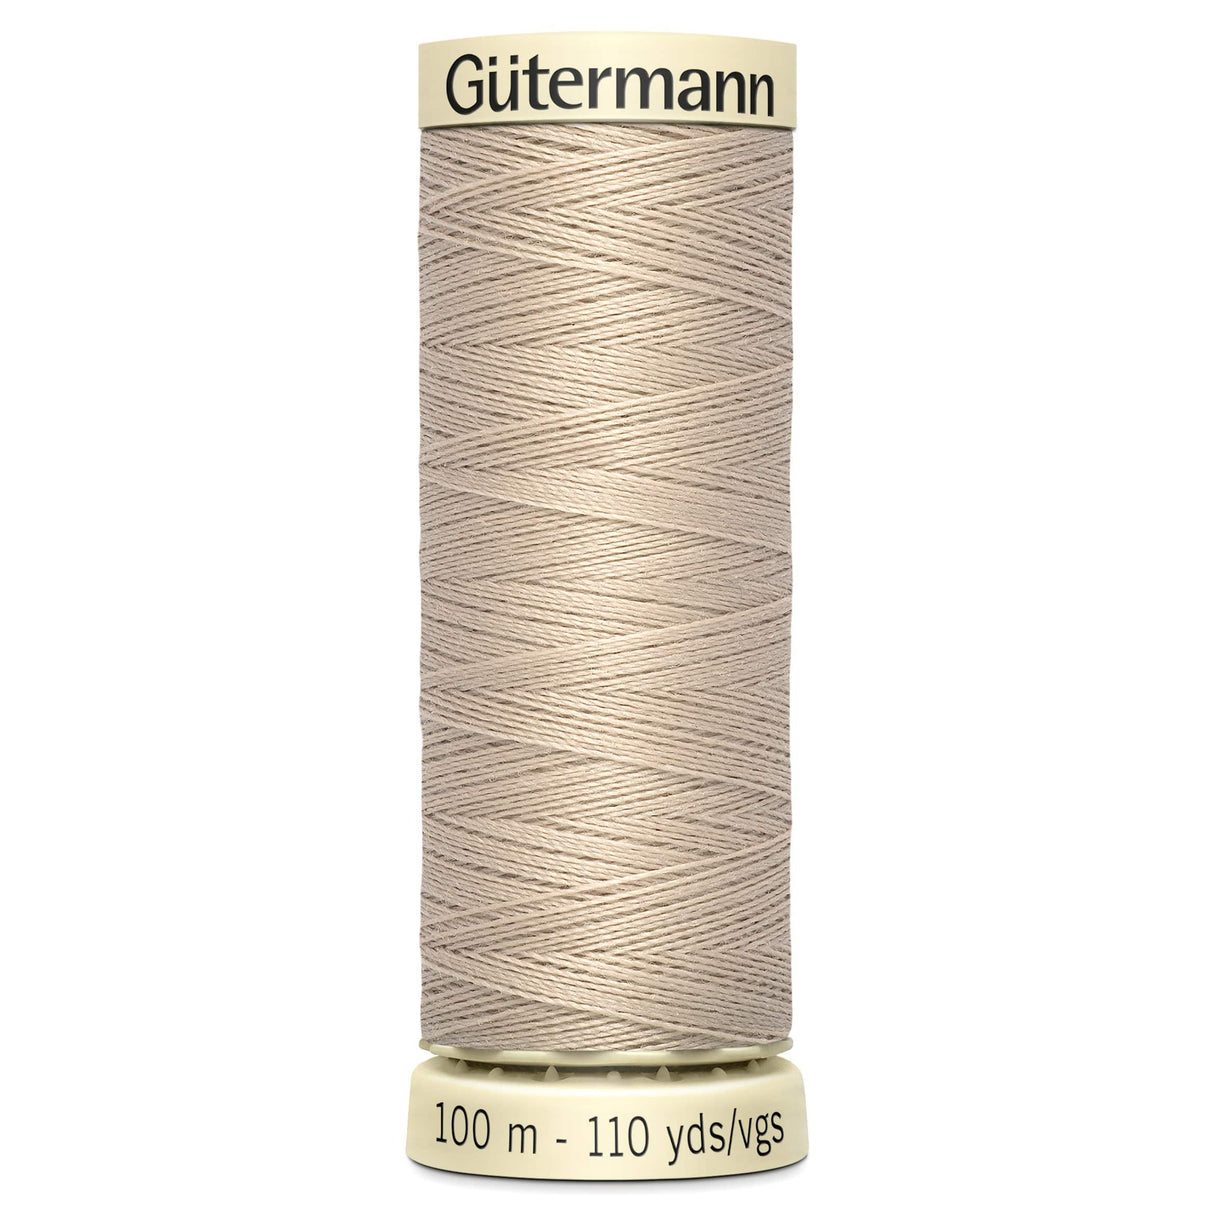 Groves Haberdashery 722 Gutermann Thread Sewing Cotton 100 m Black to Pink